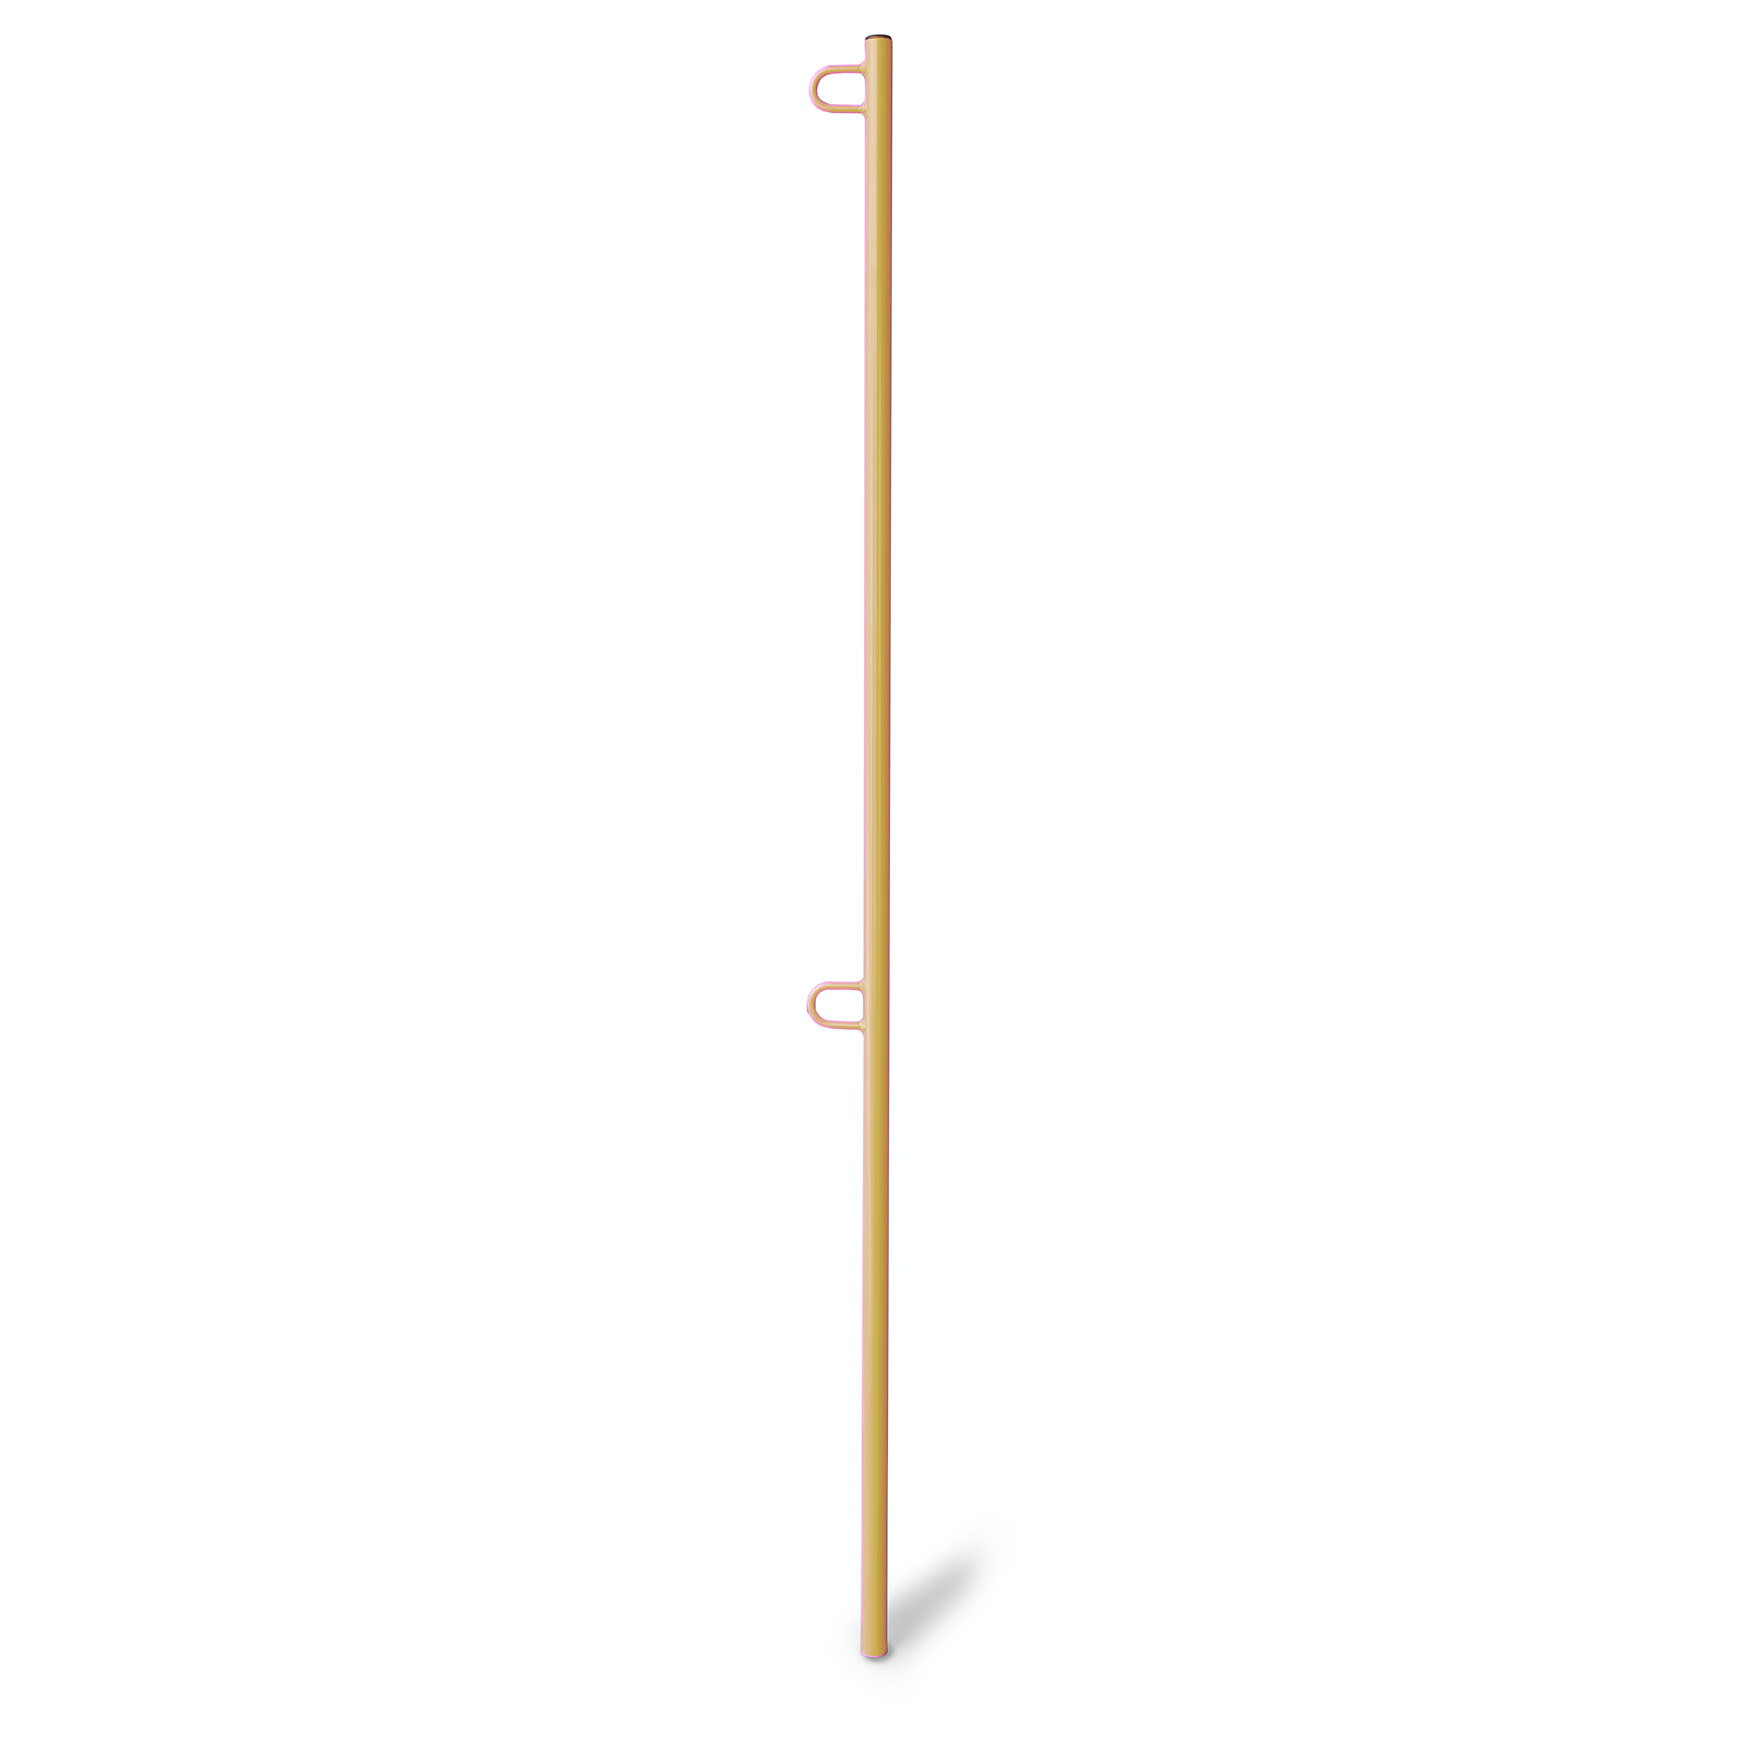 Flag Pole 5.0 feet Military Beige